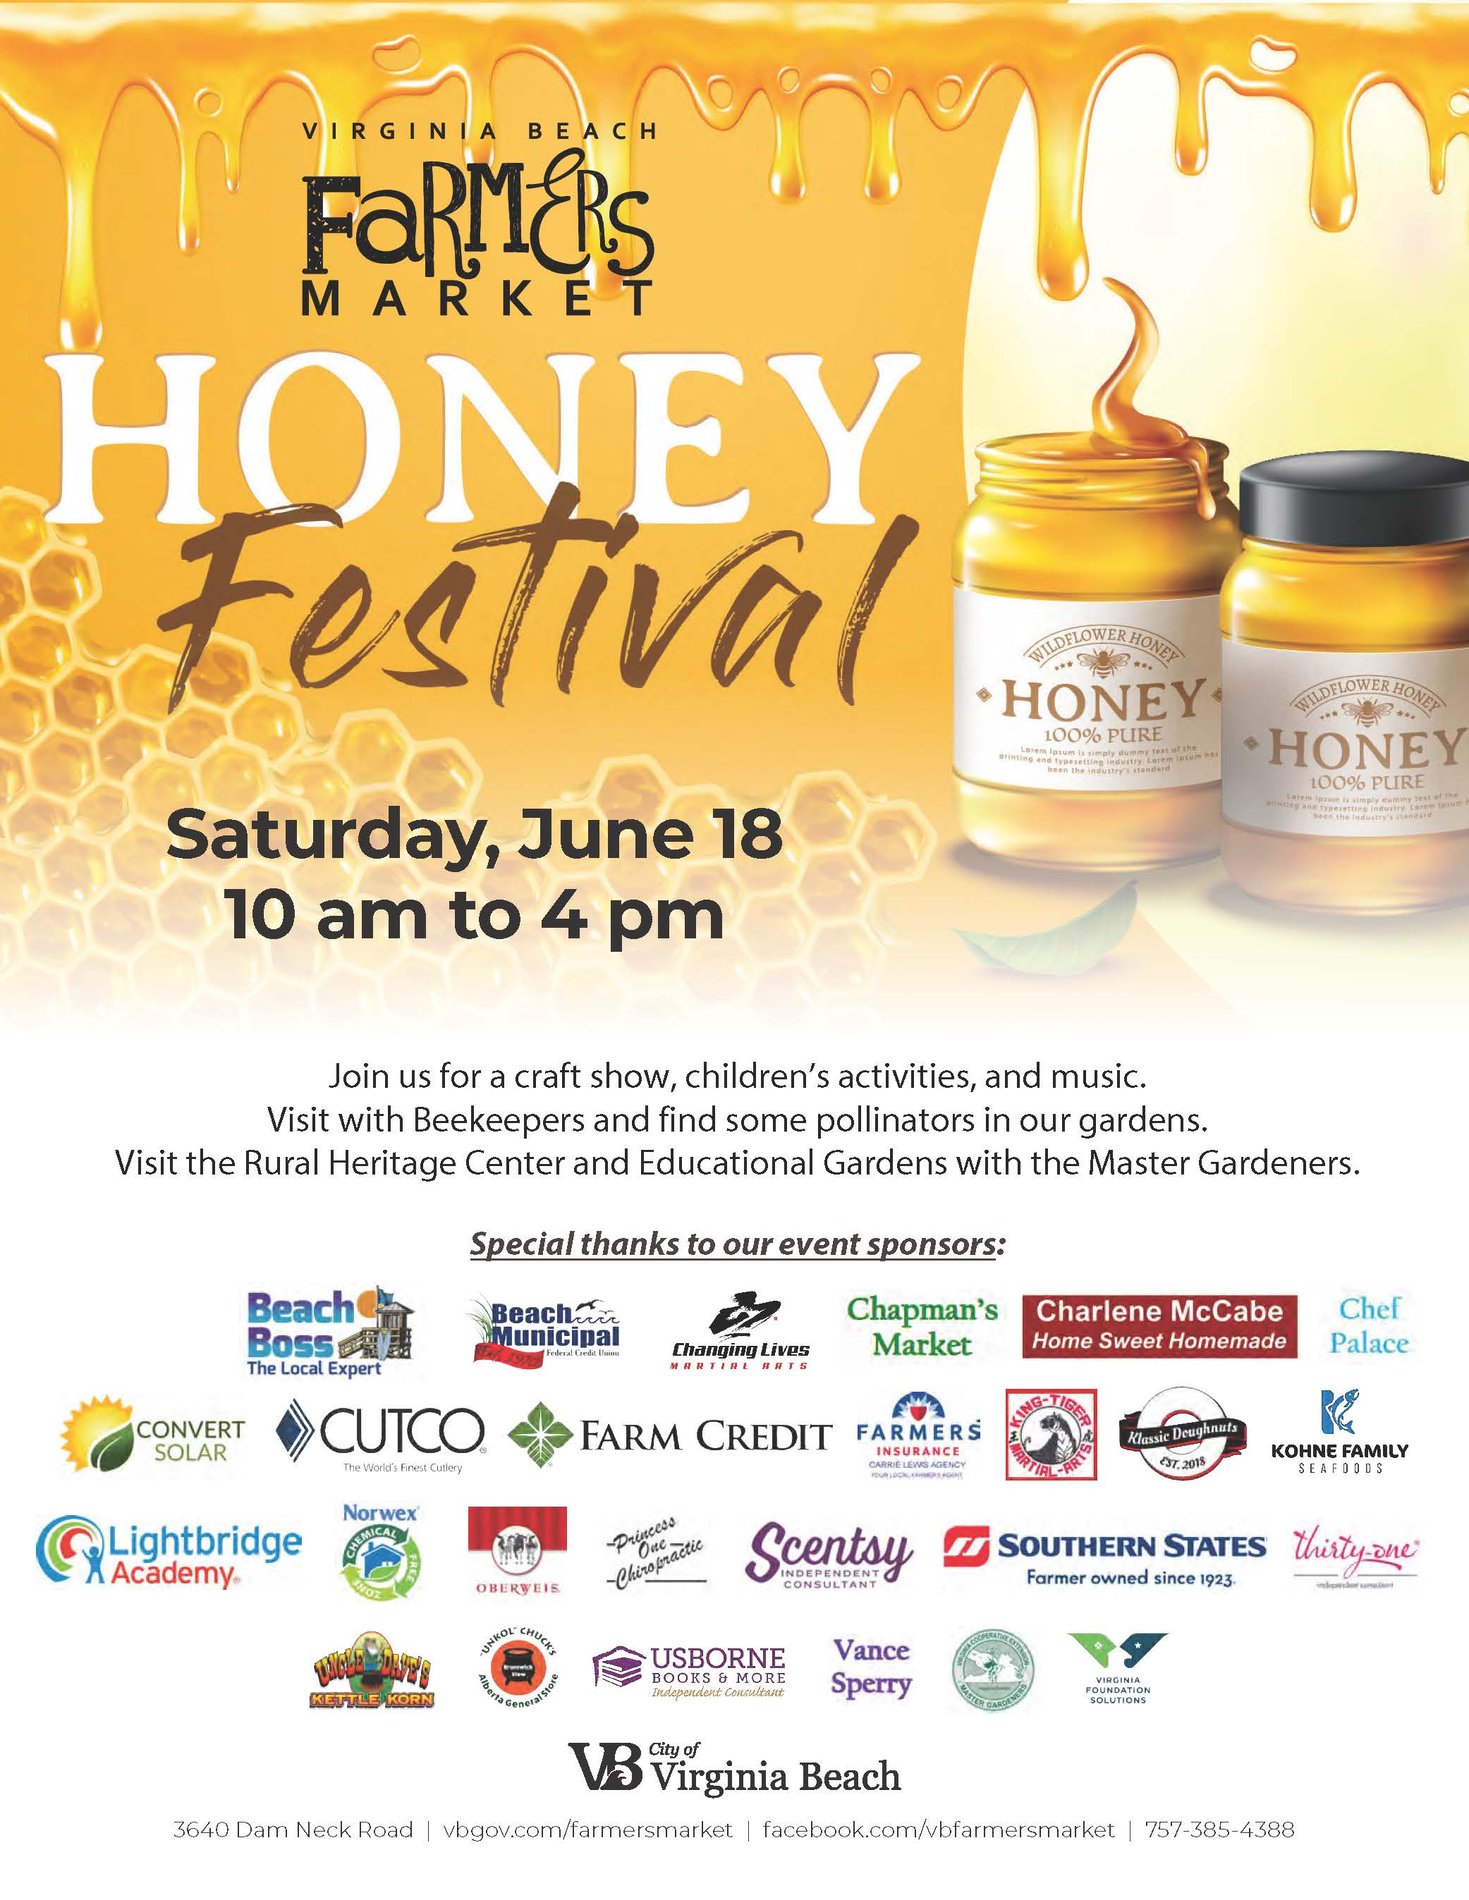 Honey Festival at the Virginia Beach Farmers Market